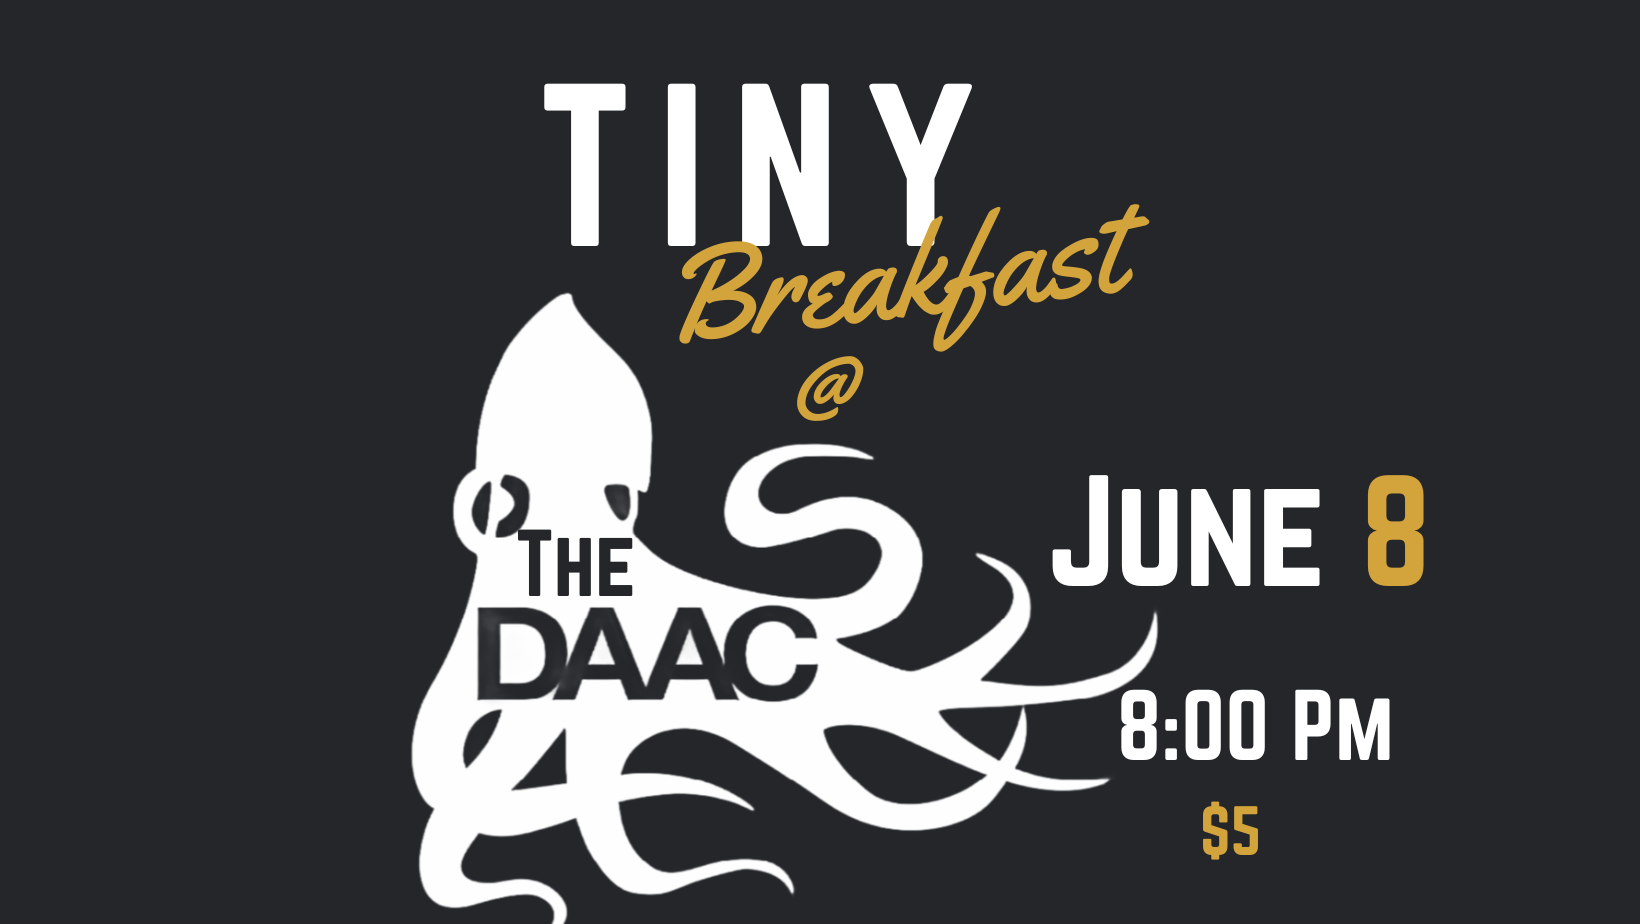 TINY Breakfast @ The DAAC, June 8, 8:00PM, $5